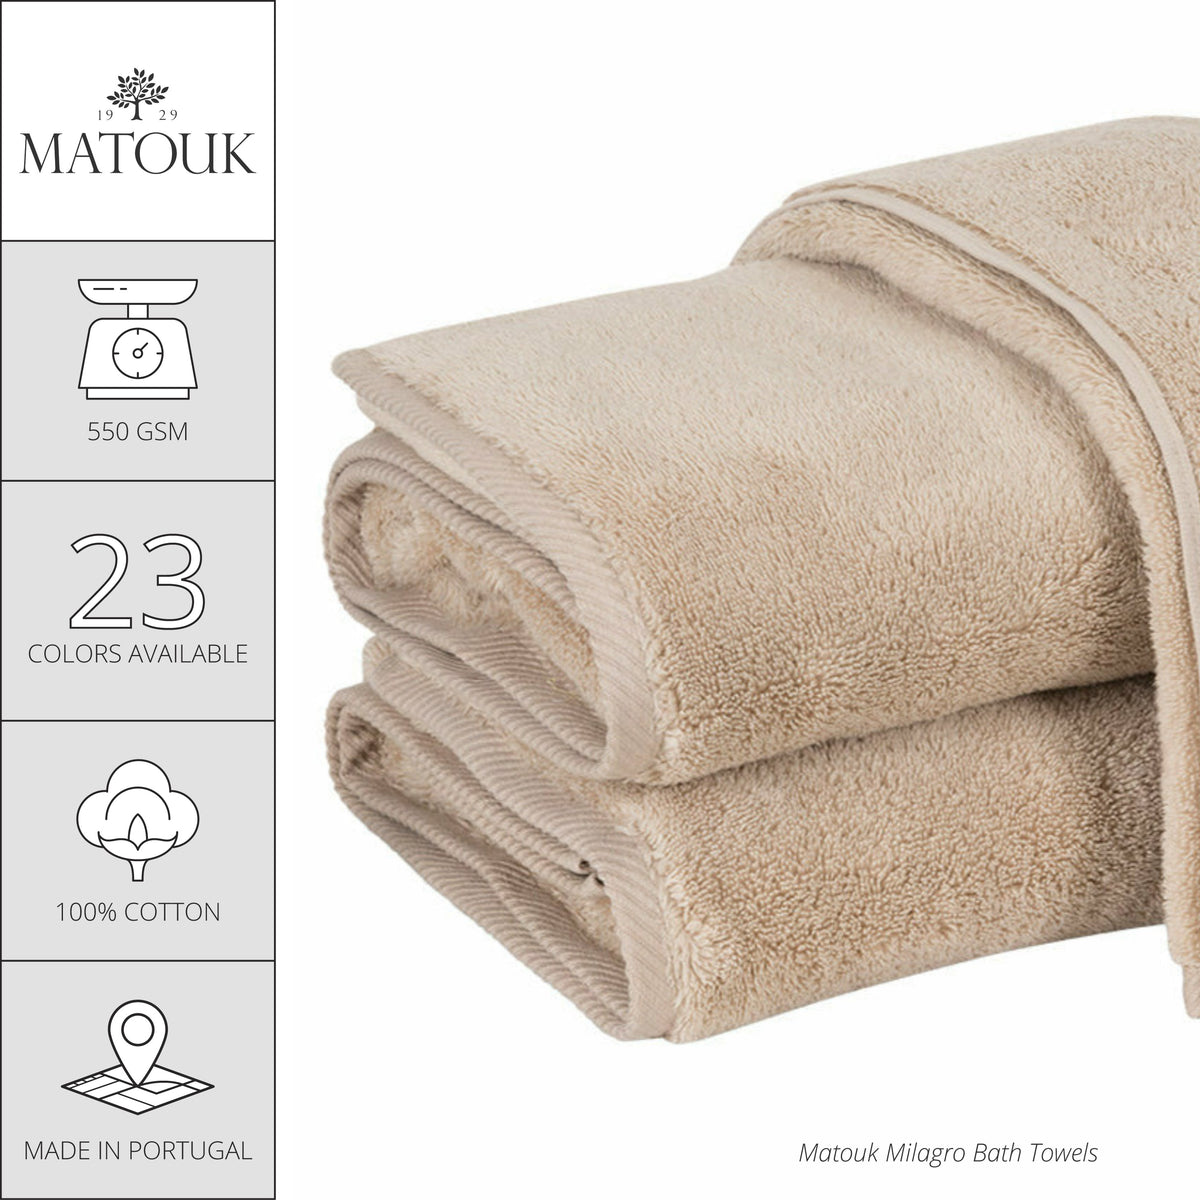 Matouk Milagro Bath Towels and Mats - Canary